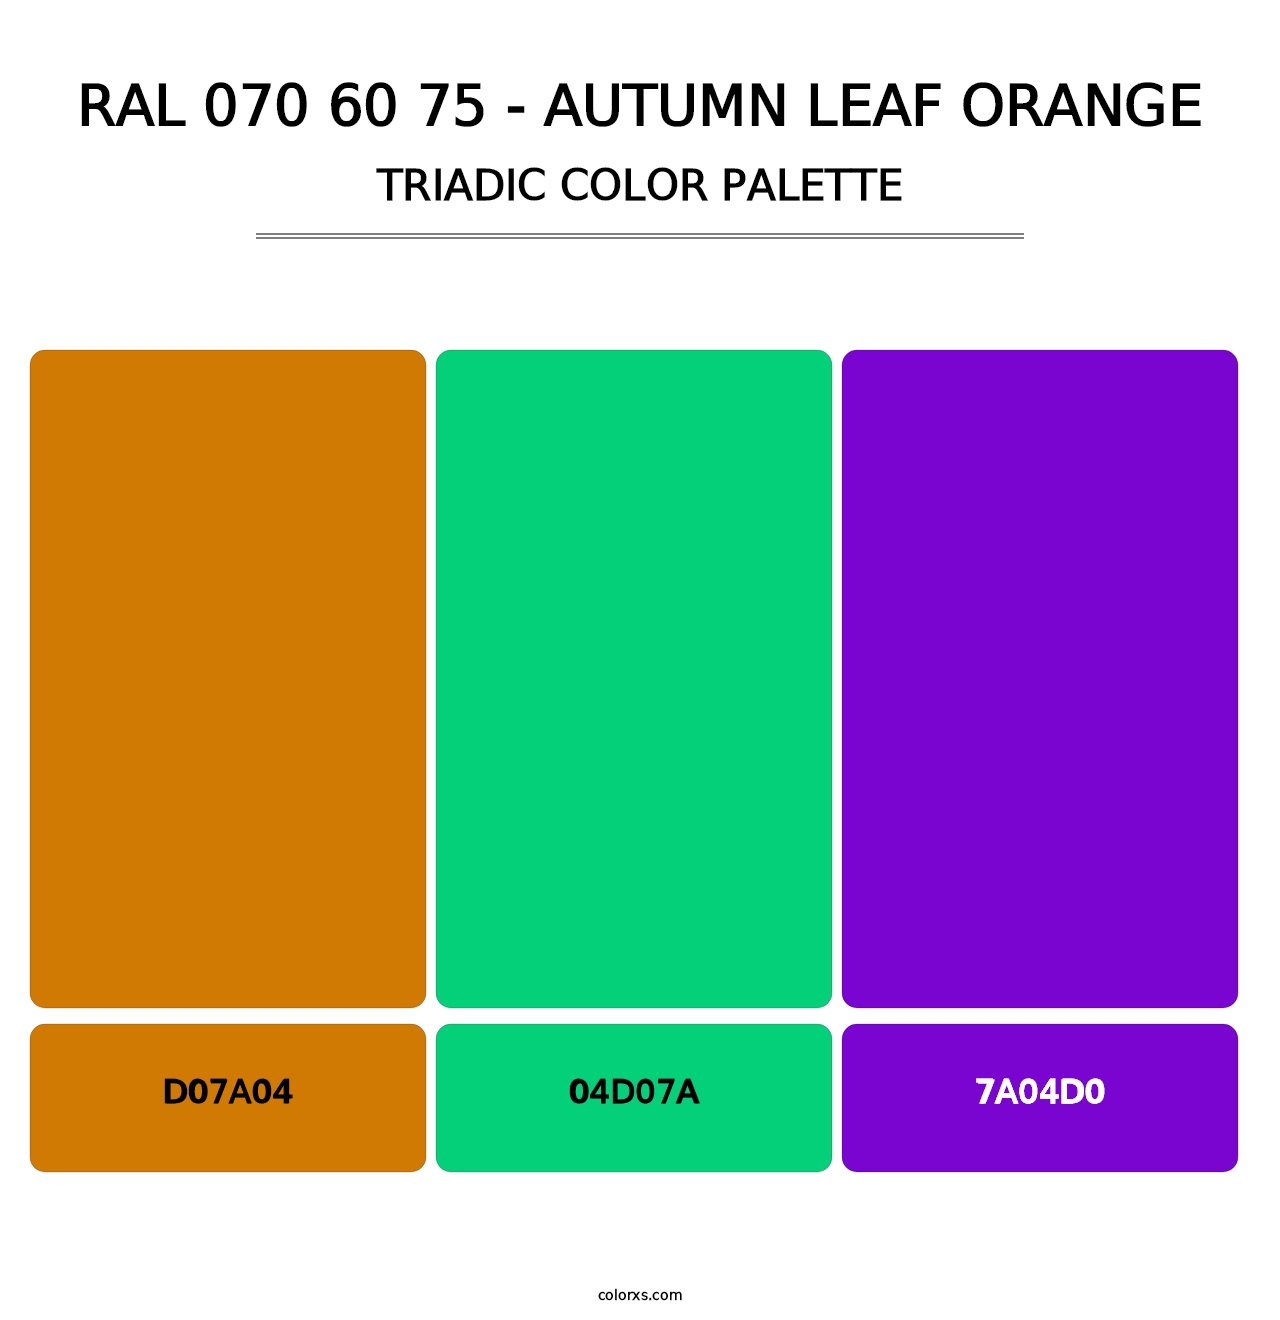 RAL 070 60 75 - Autumn Leaf Orange - Triadic Color Palette